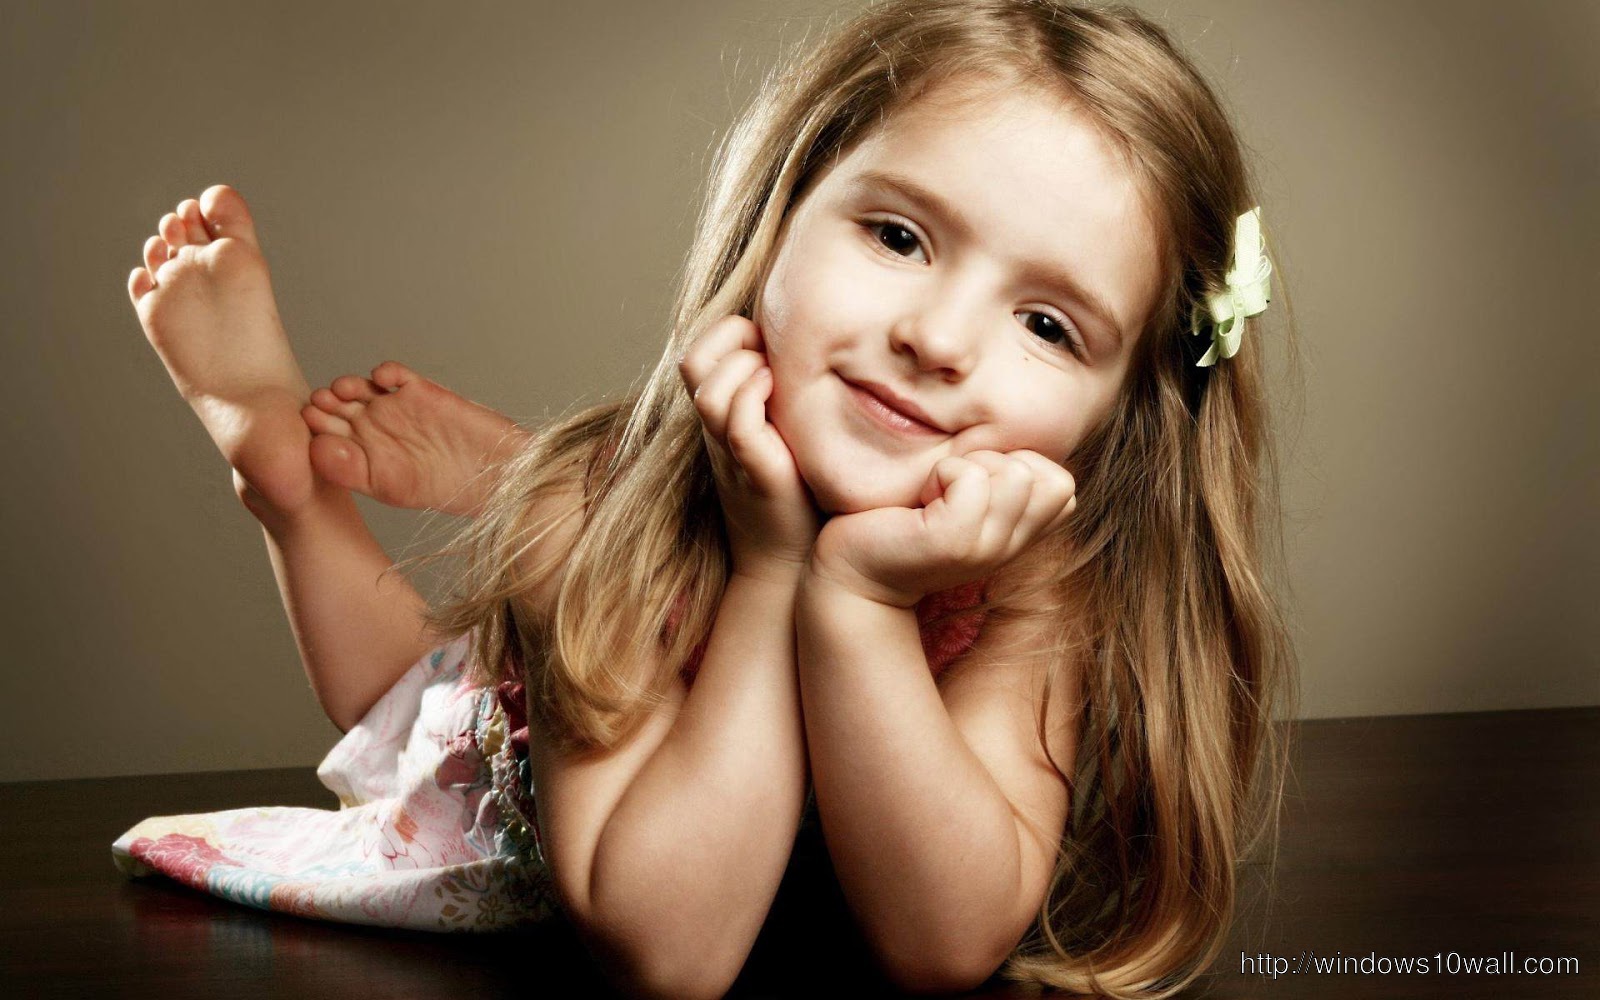 So Sweet Cute Baby Girl Wallpaper - Cute Girl Wallpapers Facebook Cover , HD Wallpaper & Backgrounds